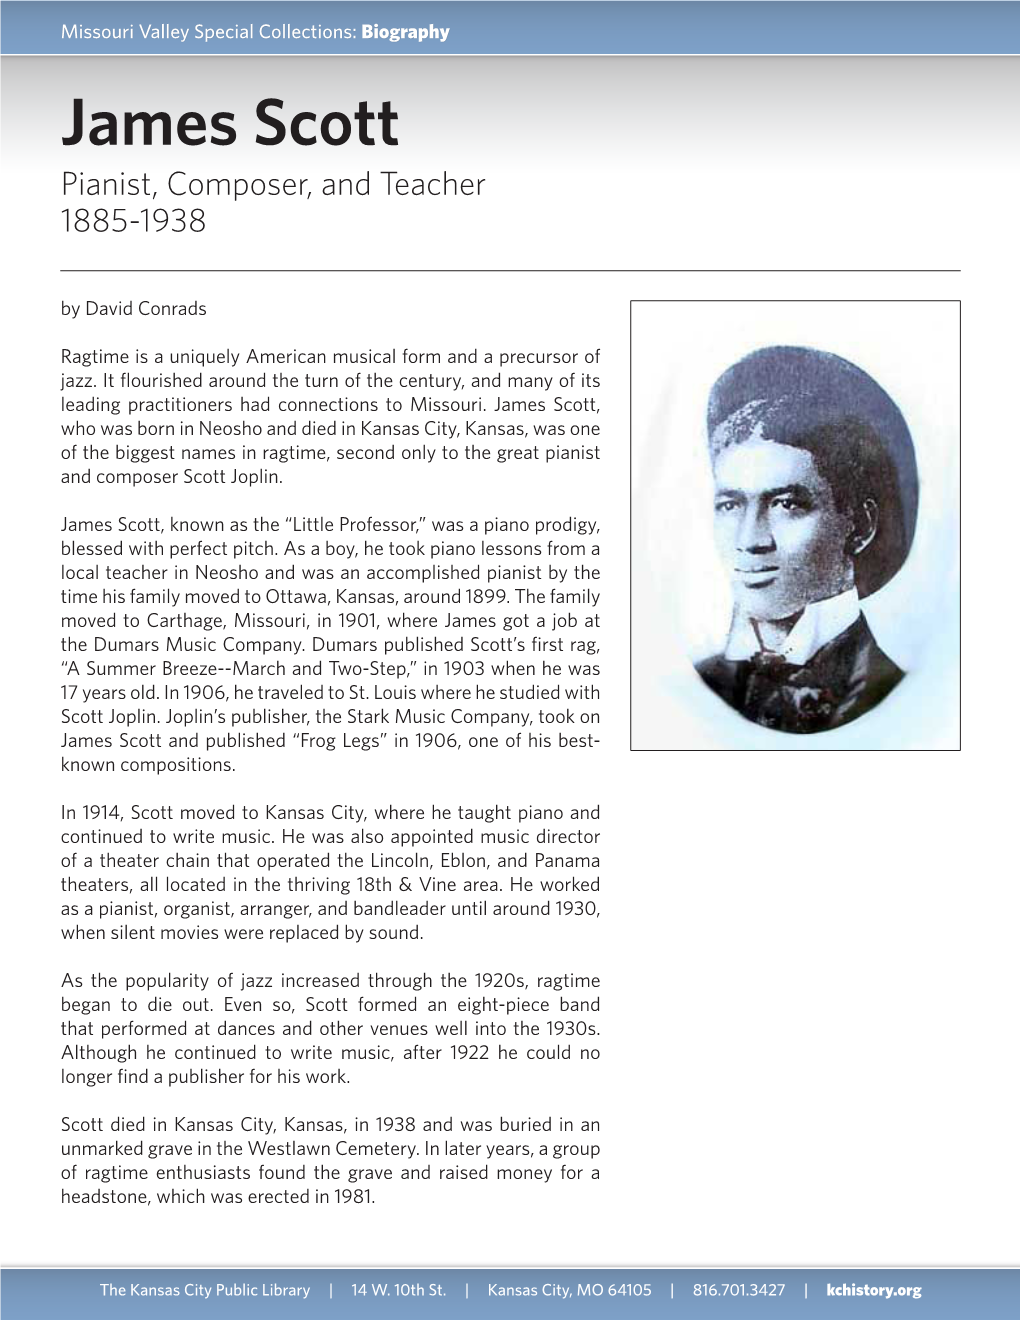 James Scott Pianist, Composer, and Teacher 1885-1938